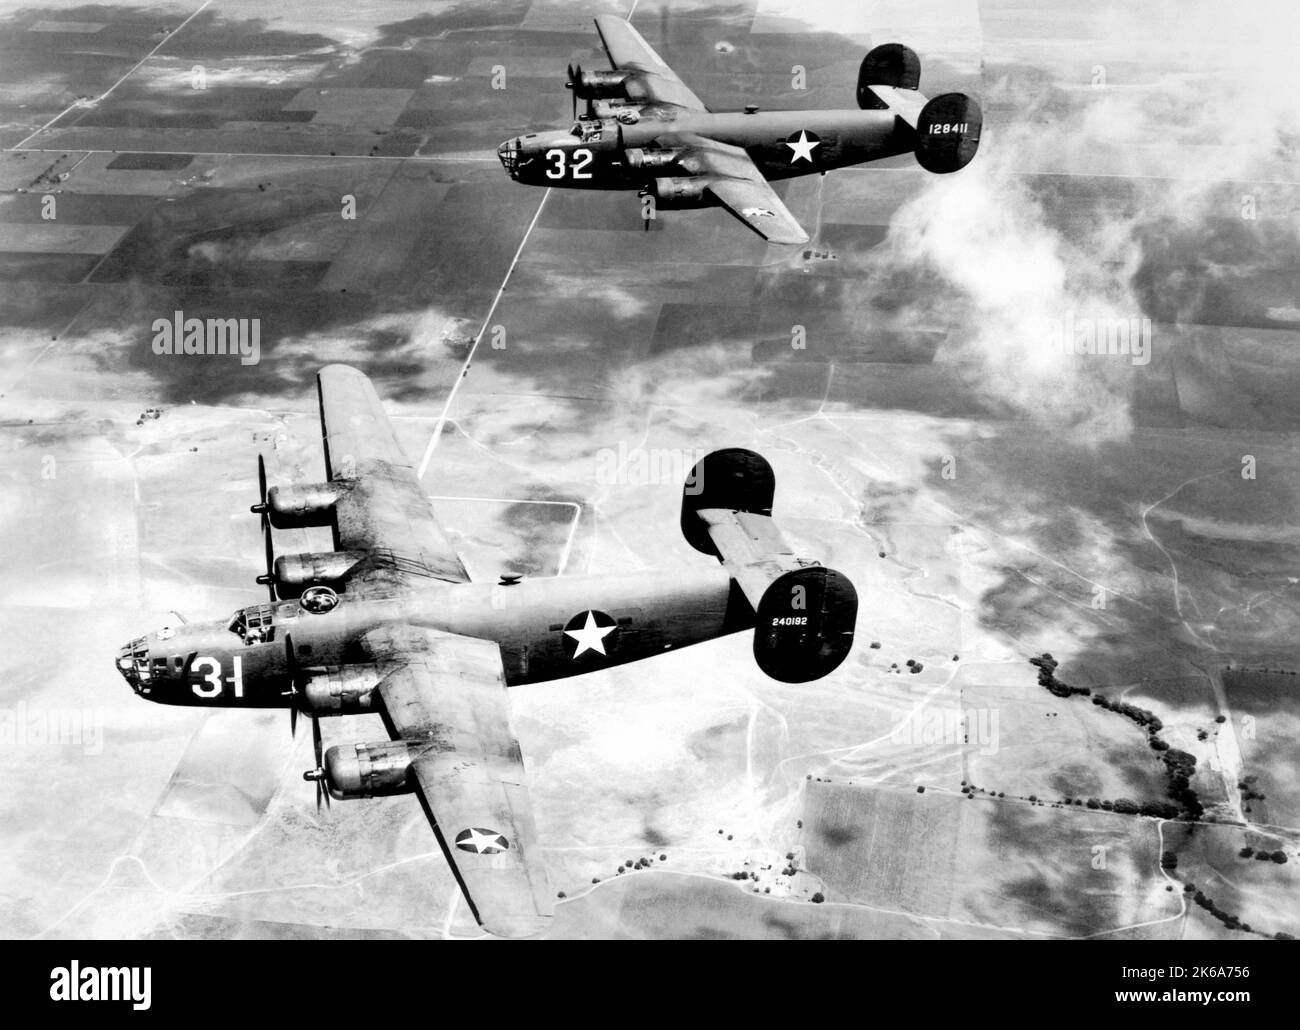 B-24 heavy bombers conducting operations during World War II. Stock Photo